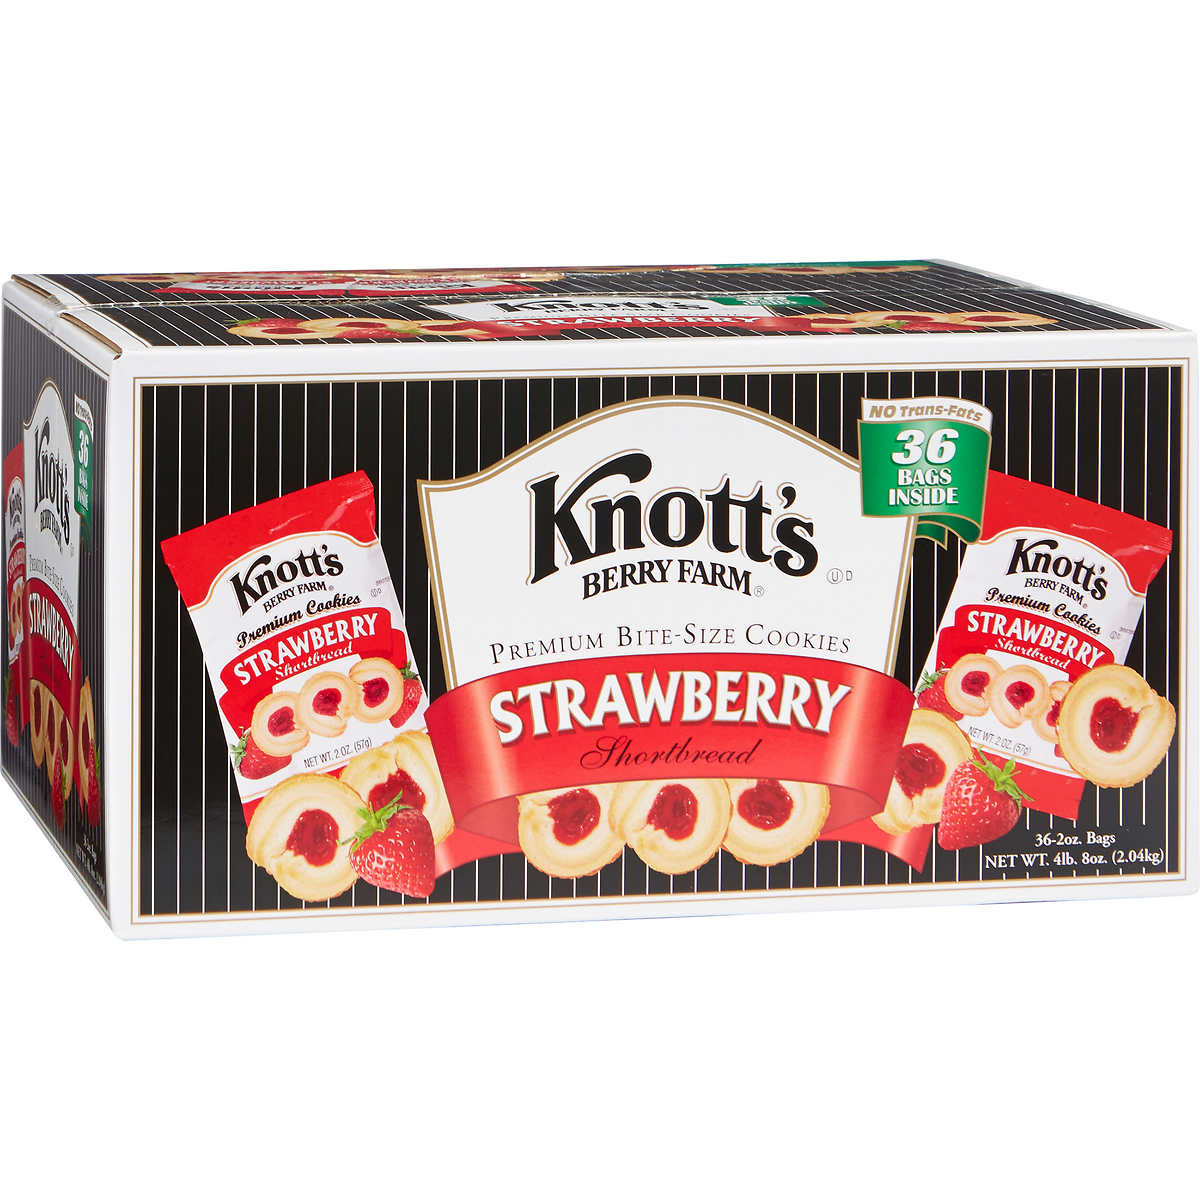 Knott's Bite Size Cookies Strawberry Shortbread